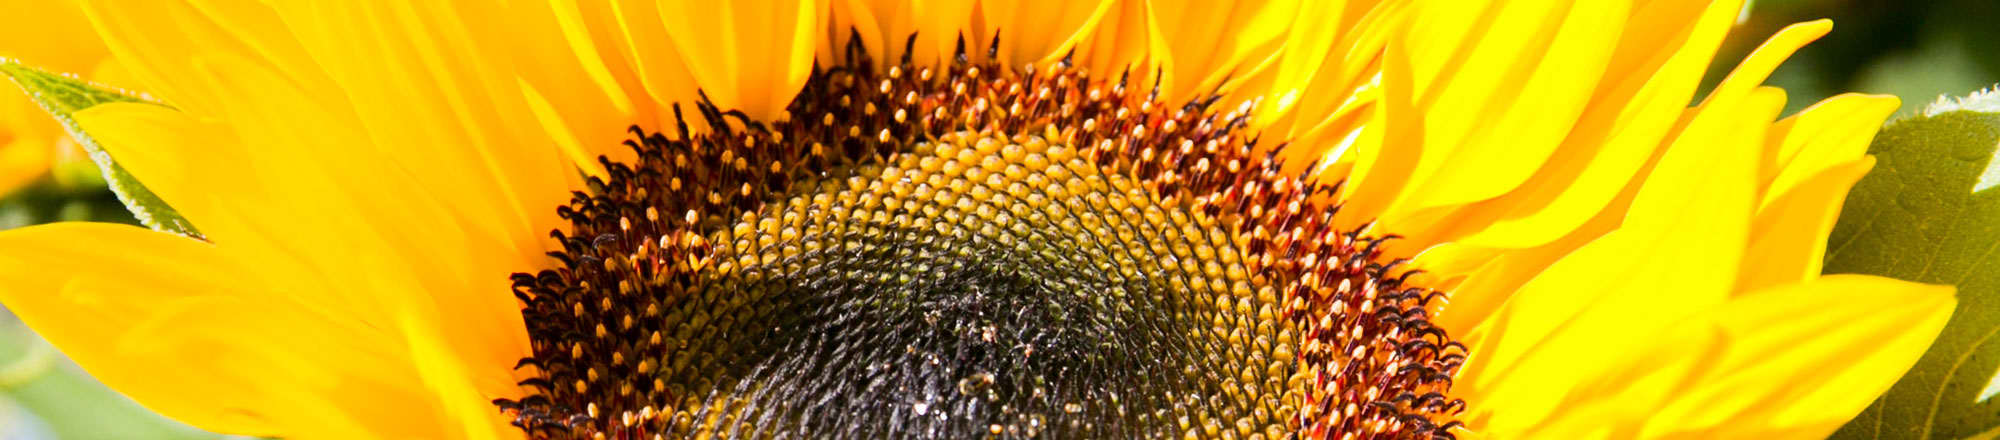 Sunflowers - divine and beautiful